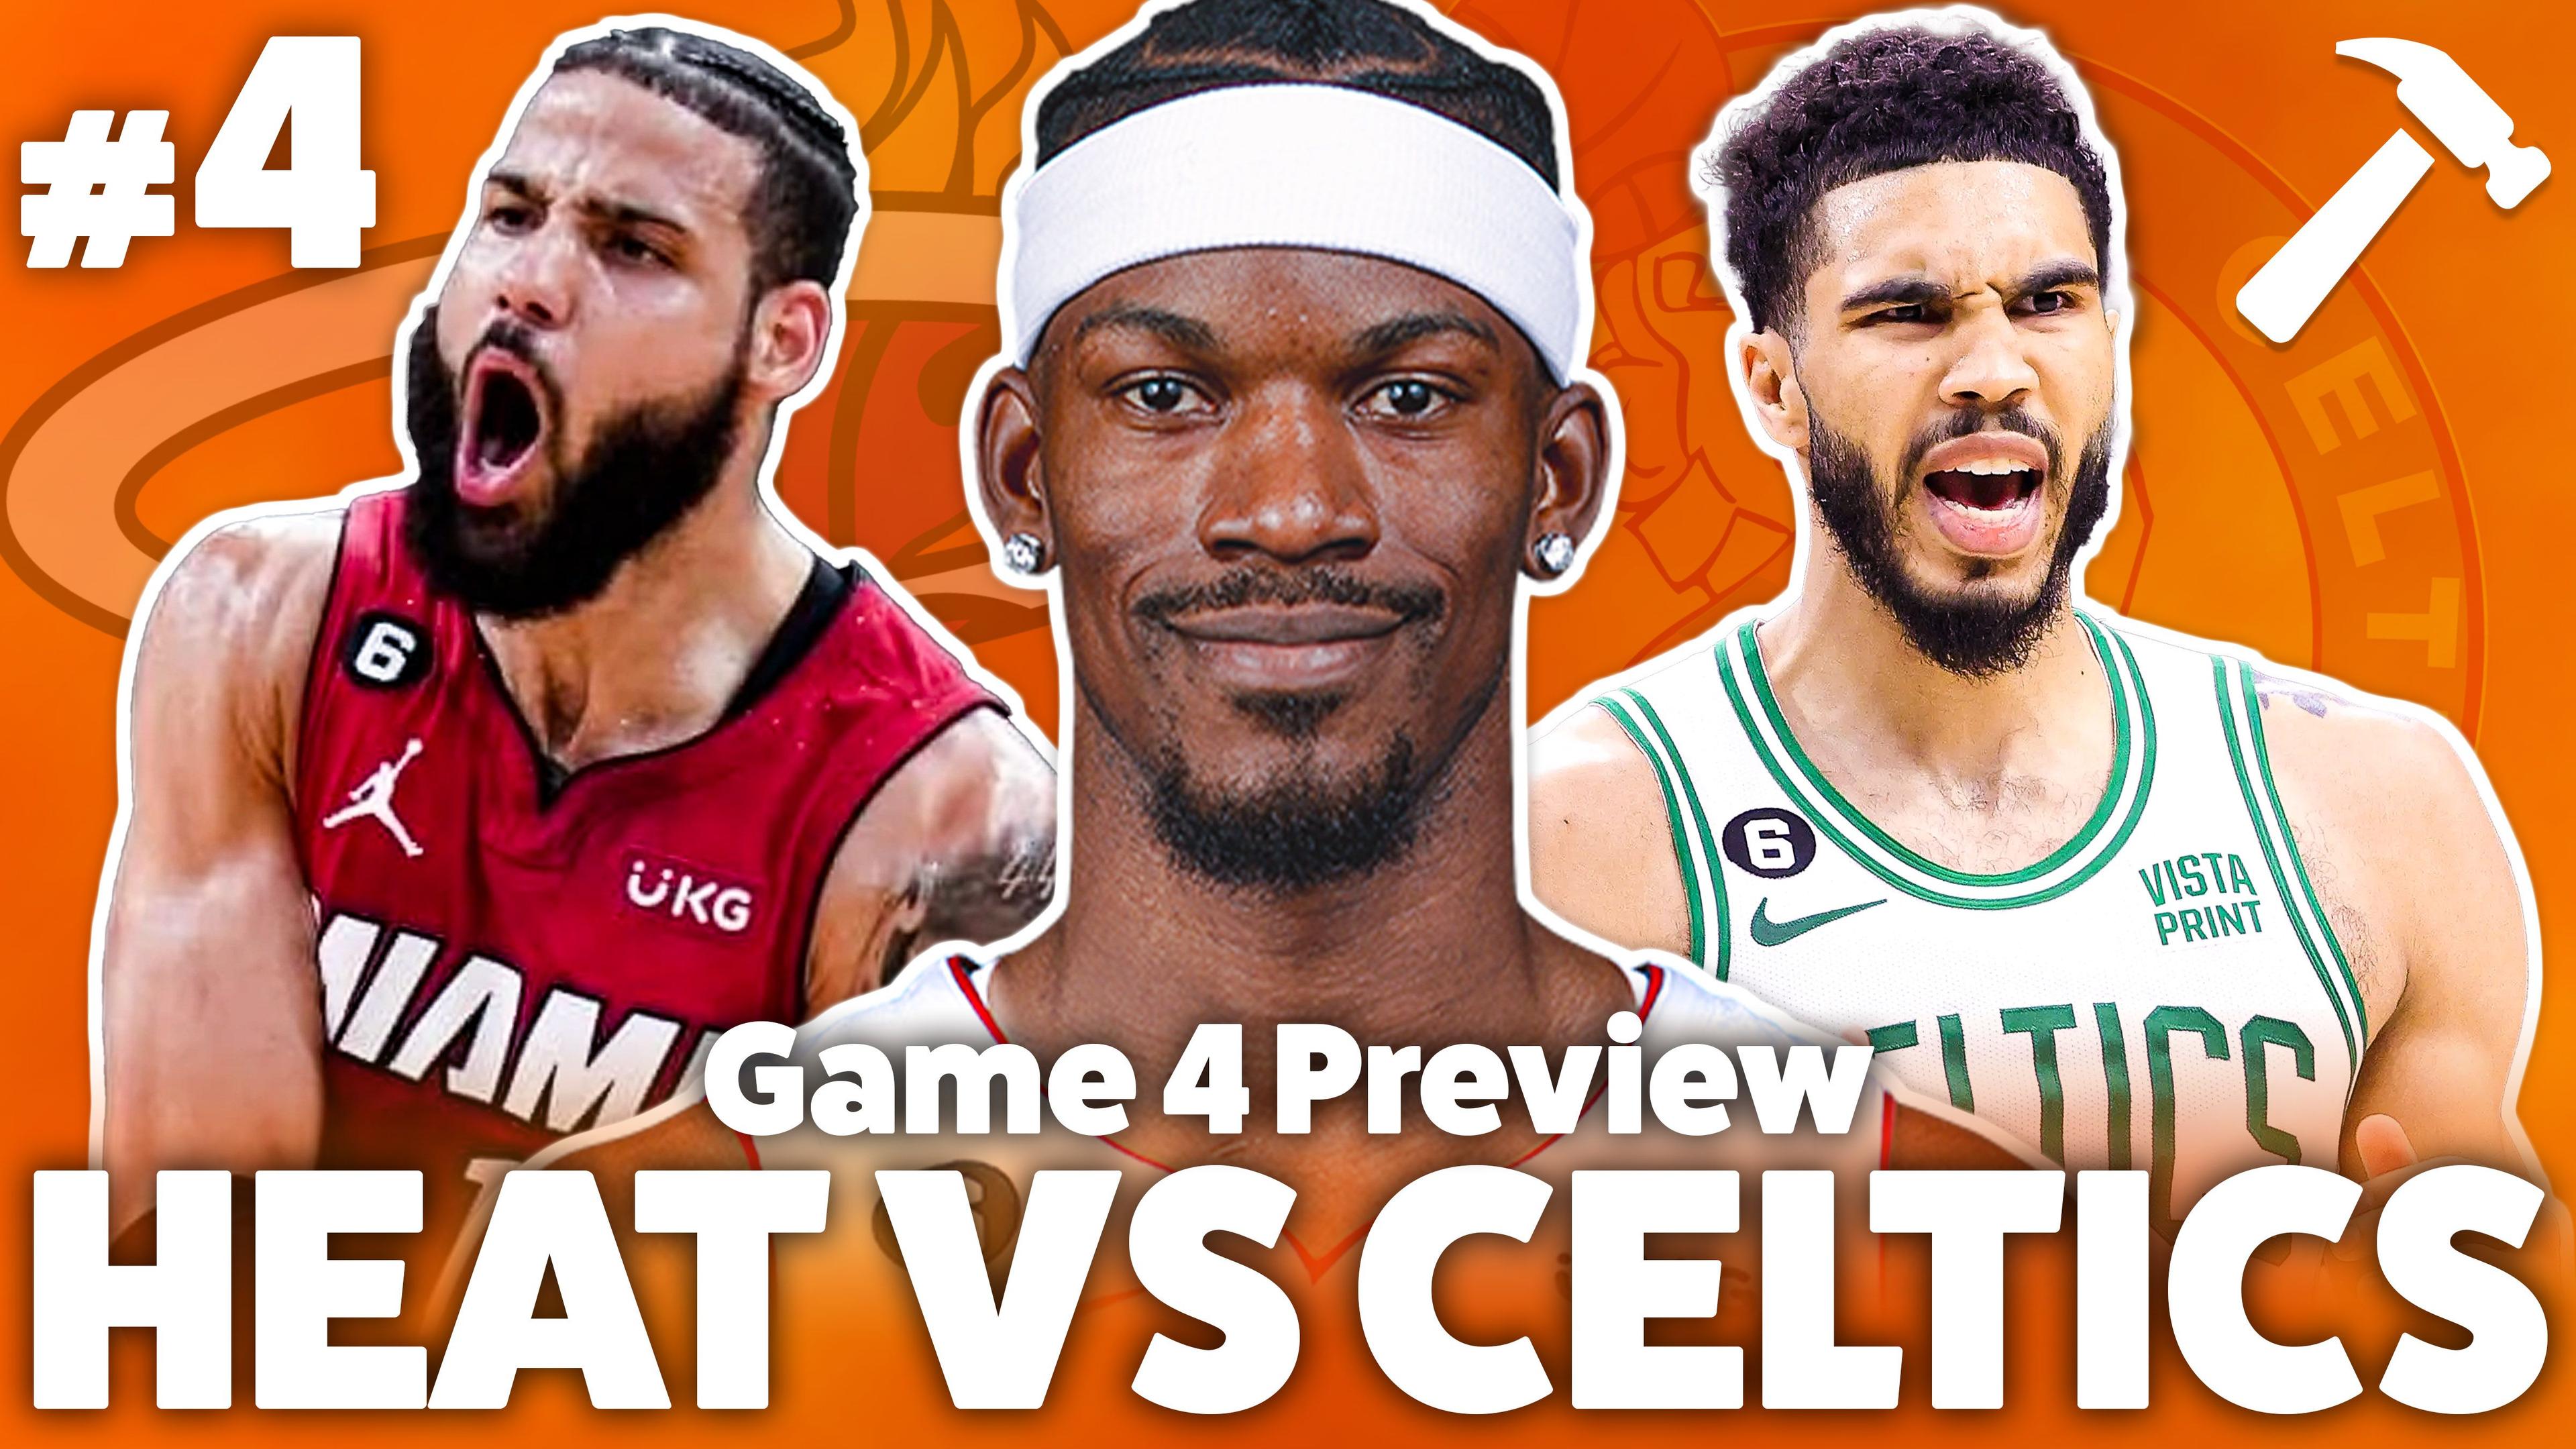 Heat vs Celtics game 4 preview.jpg